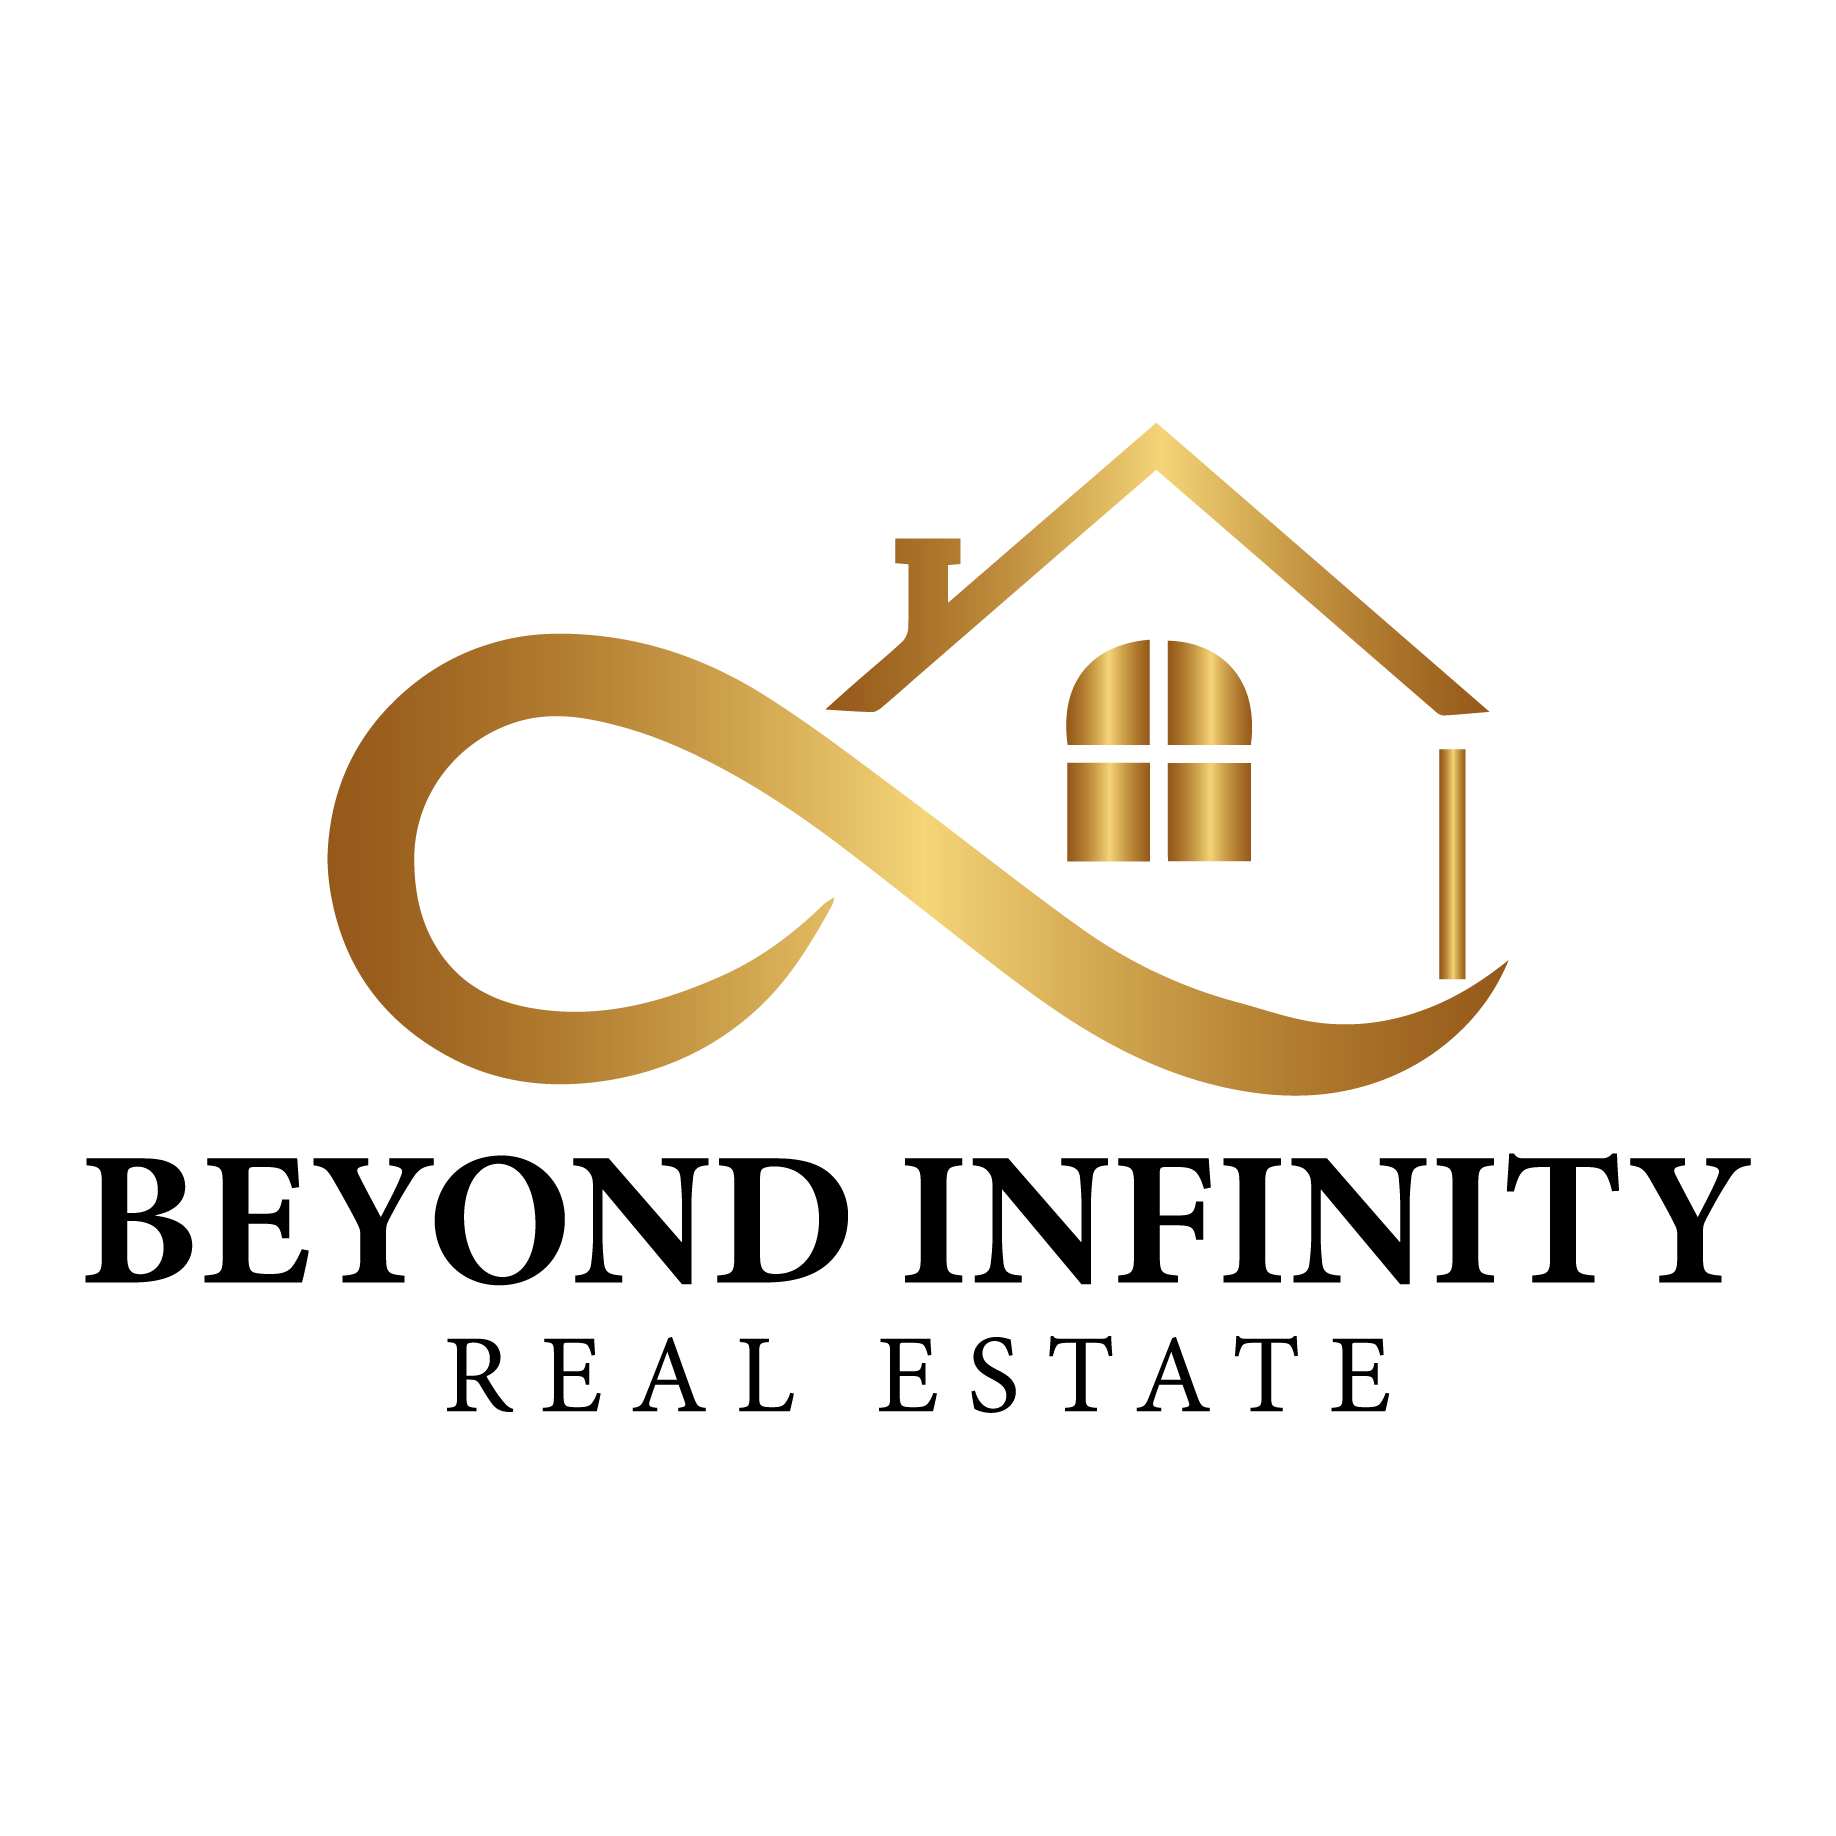 Beyond Infinity Real Estate